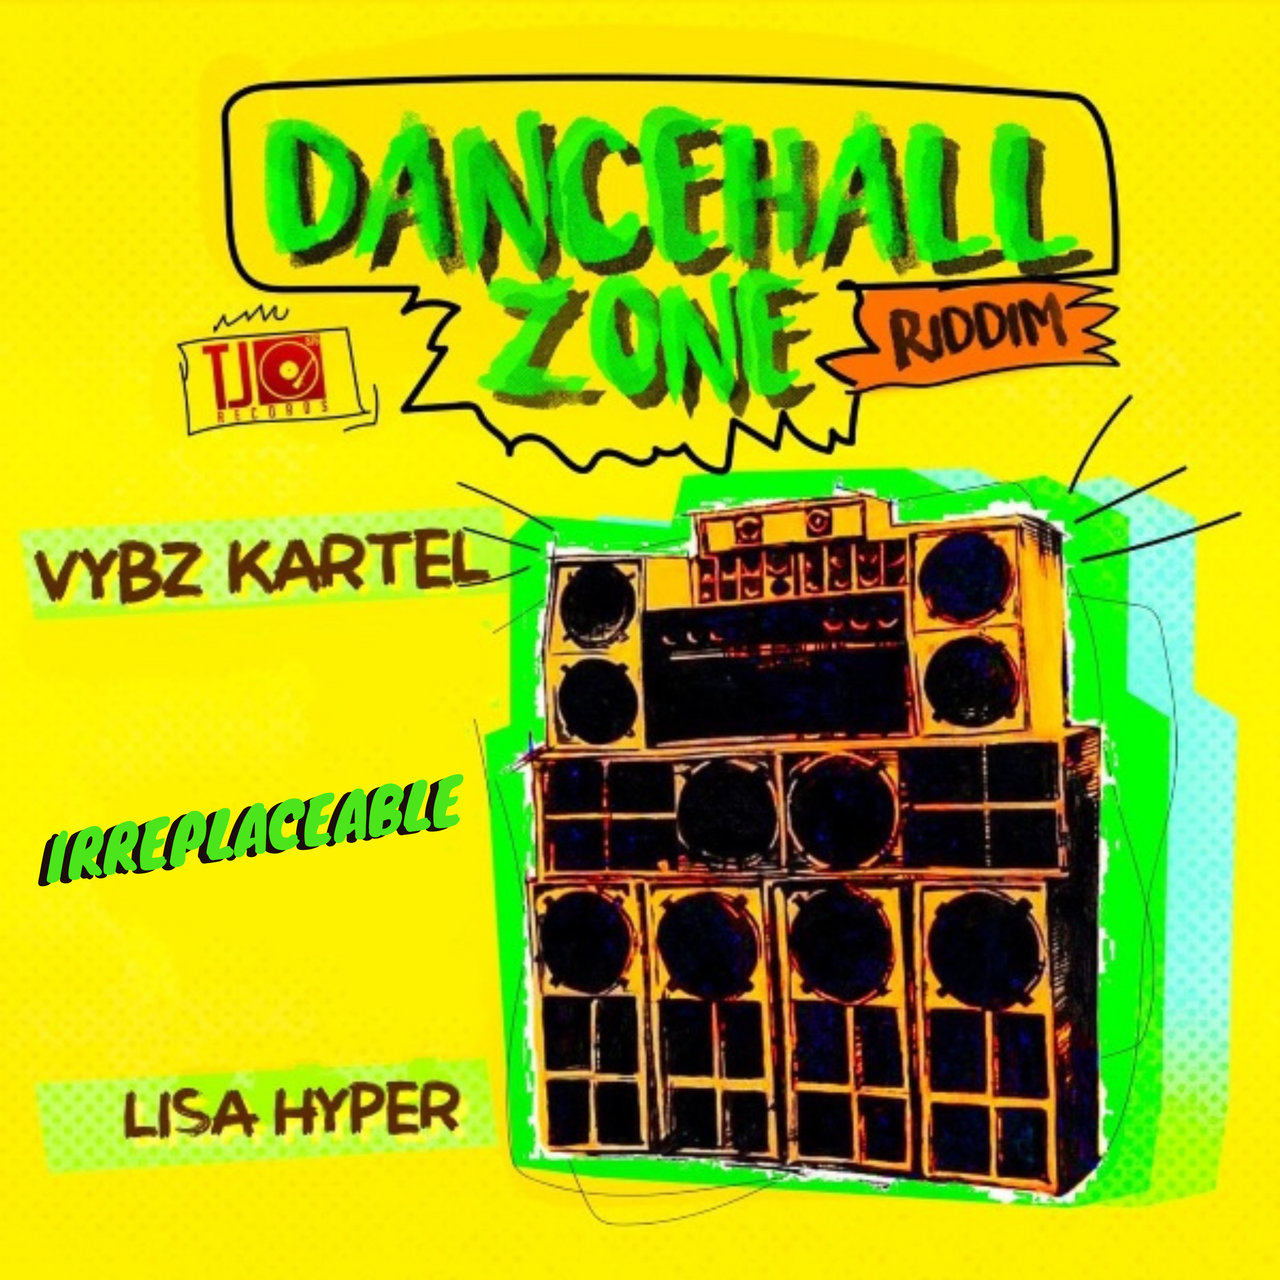 Vybz Kartel and Lisa Hyper - Irreplaceable (Cover)